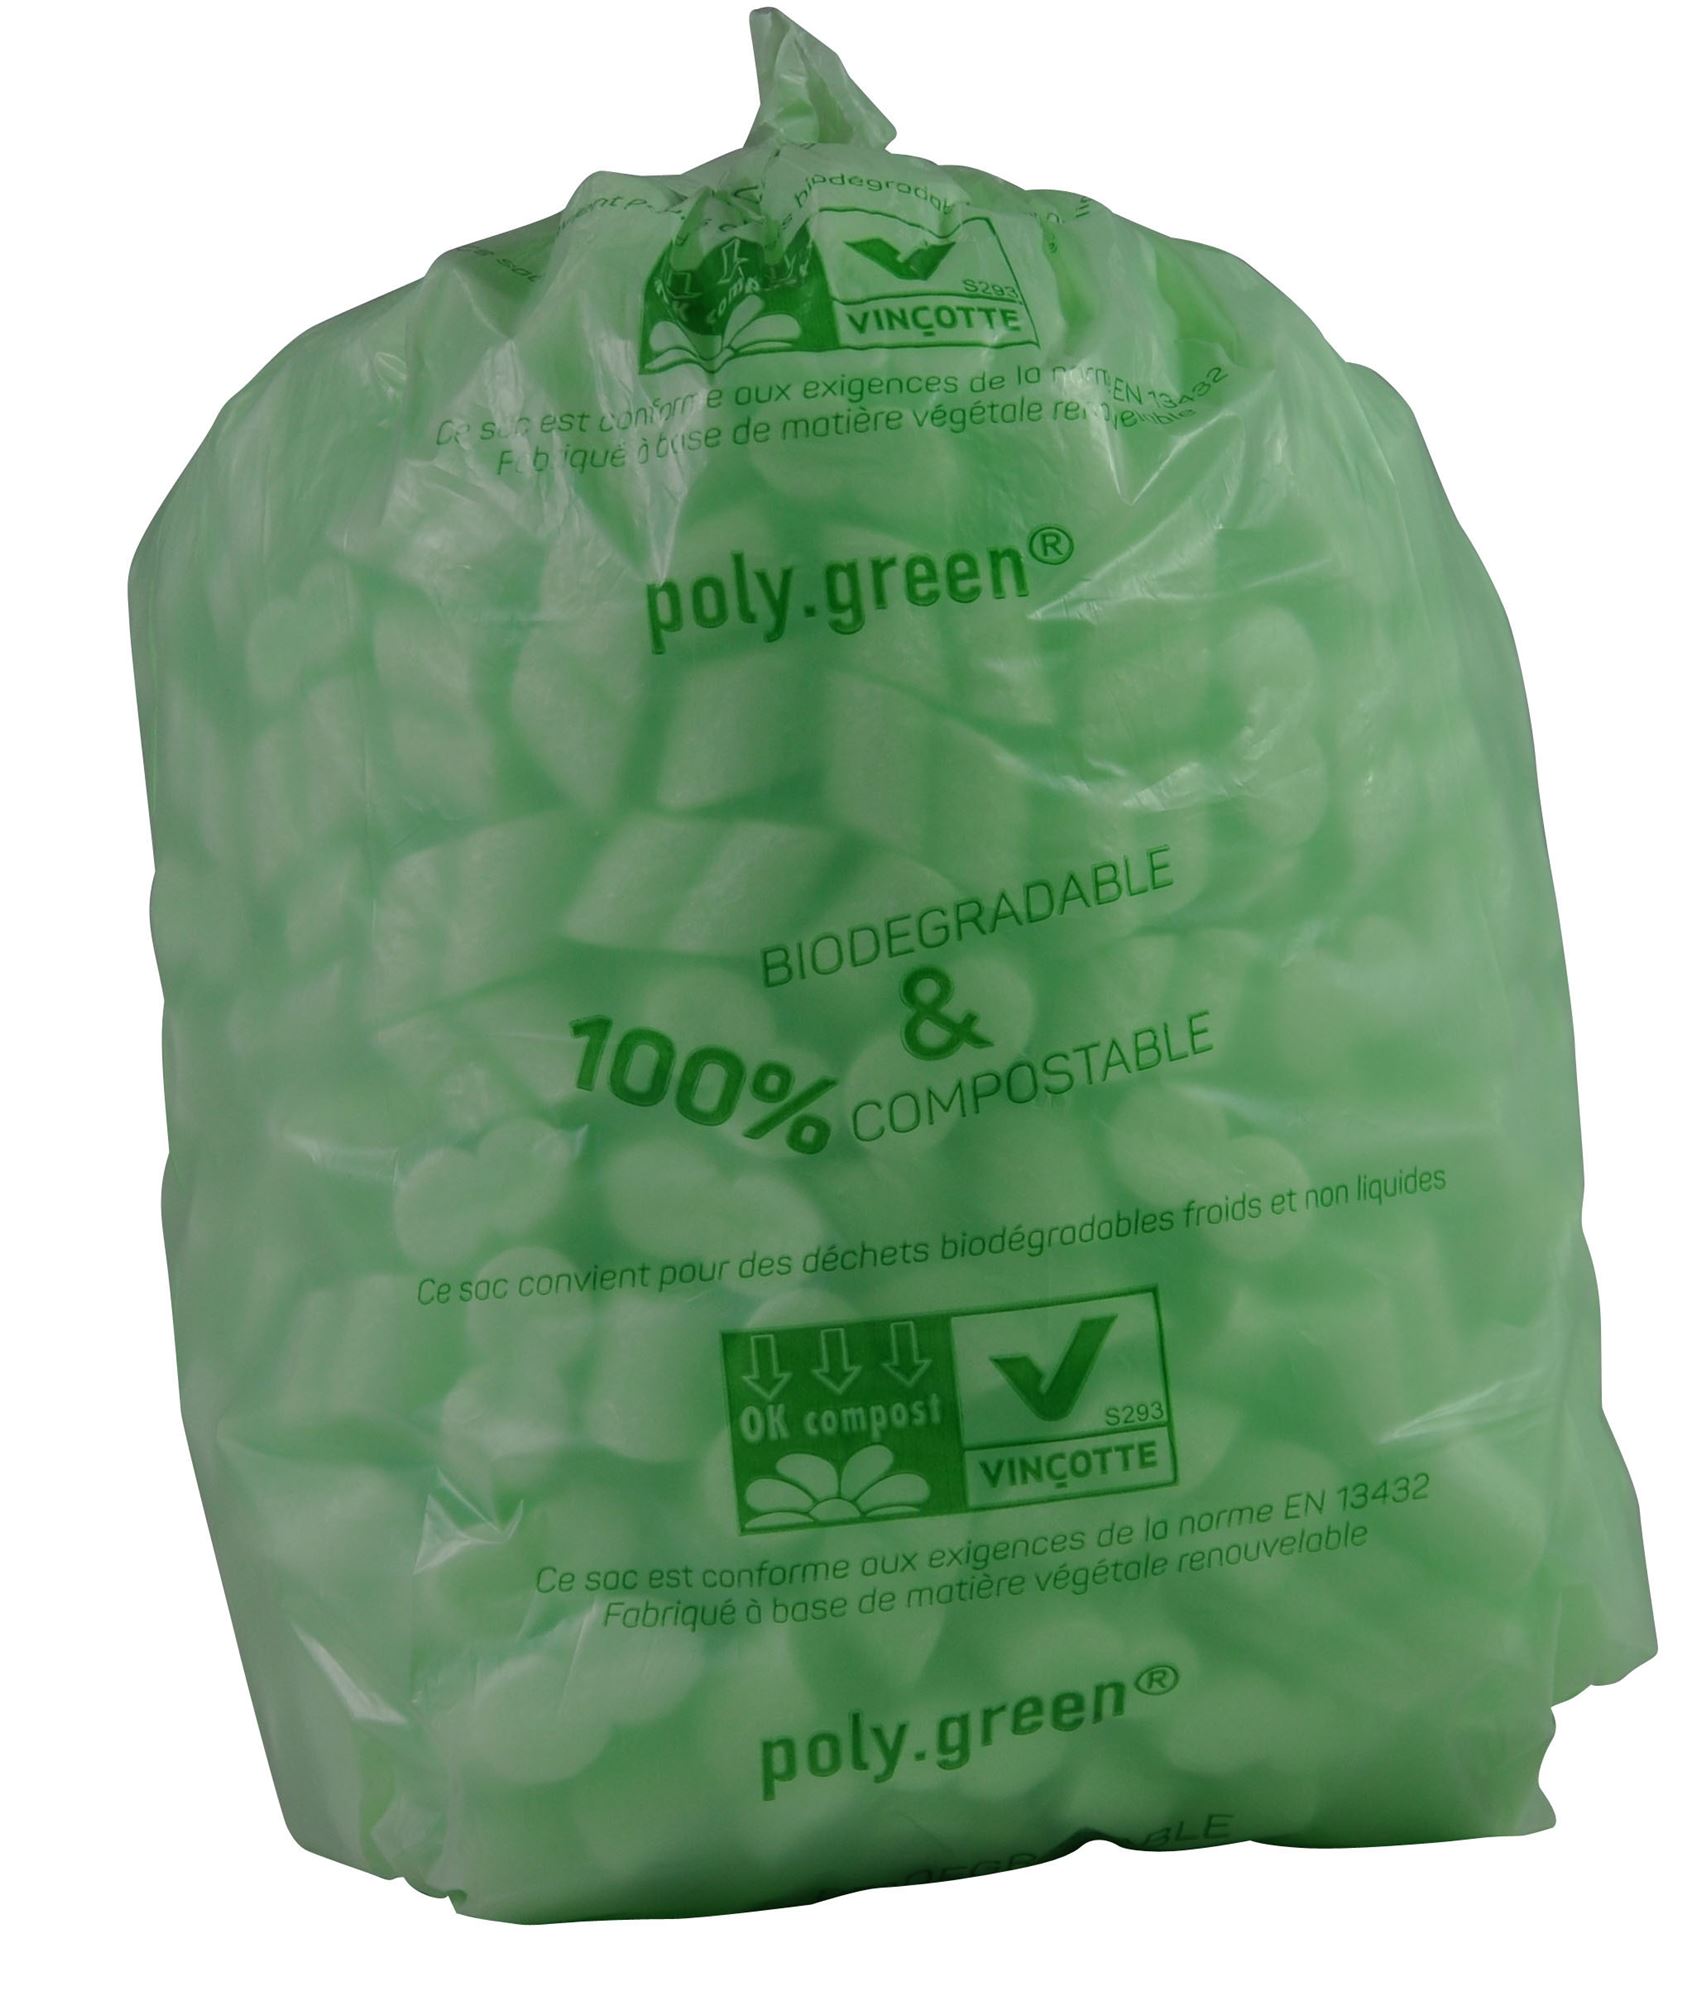 sticker Recycle Must Biodegradable waste bin 10 liter